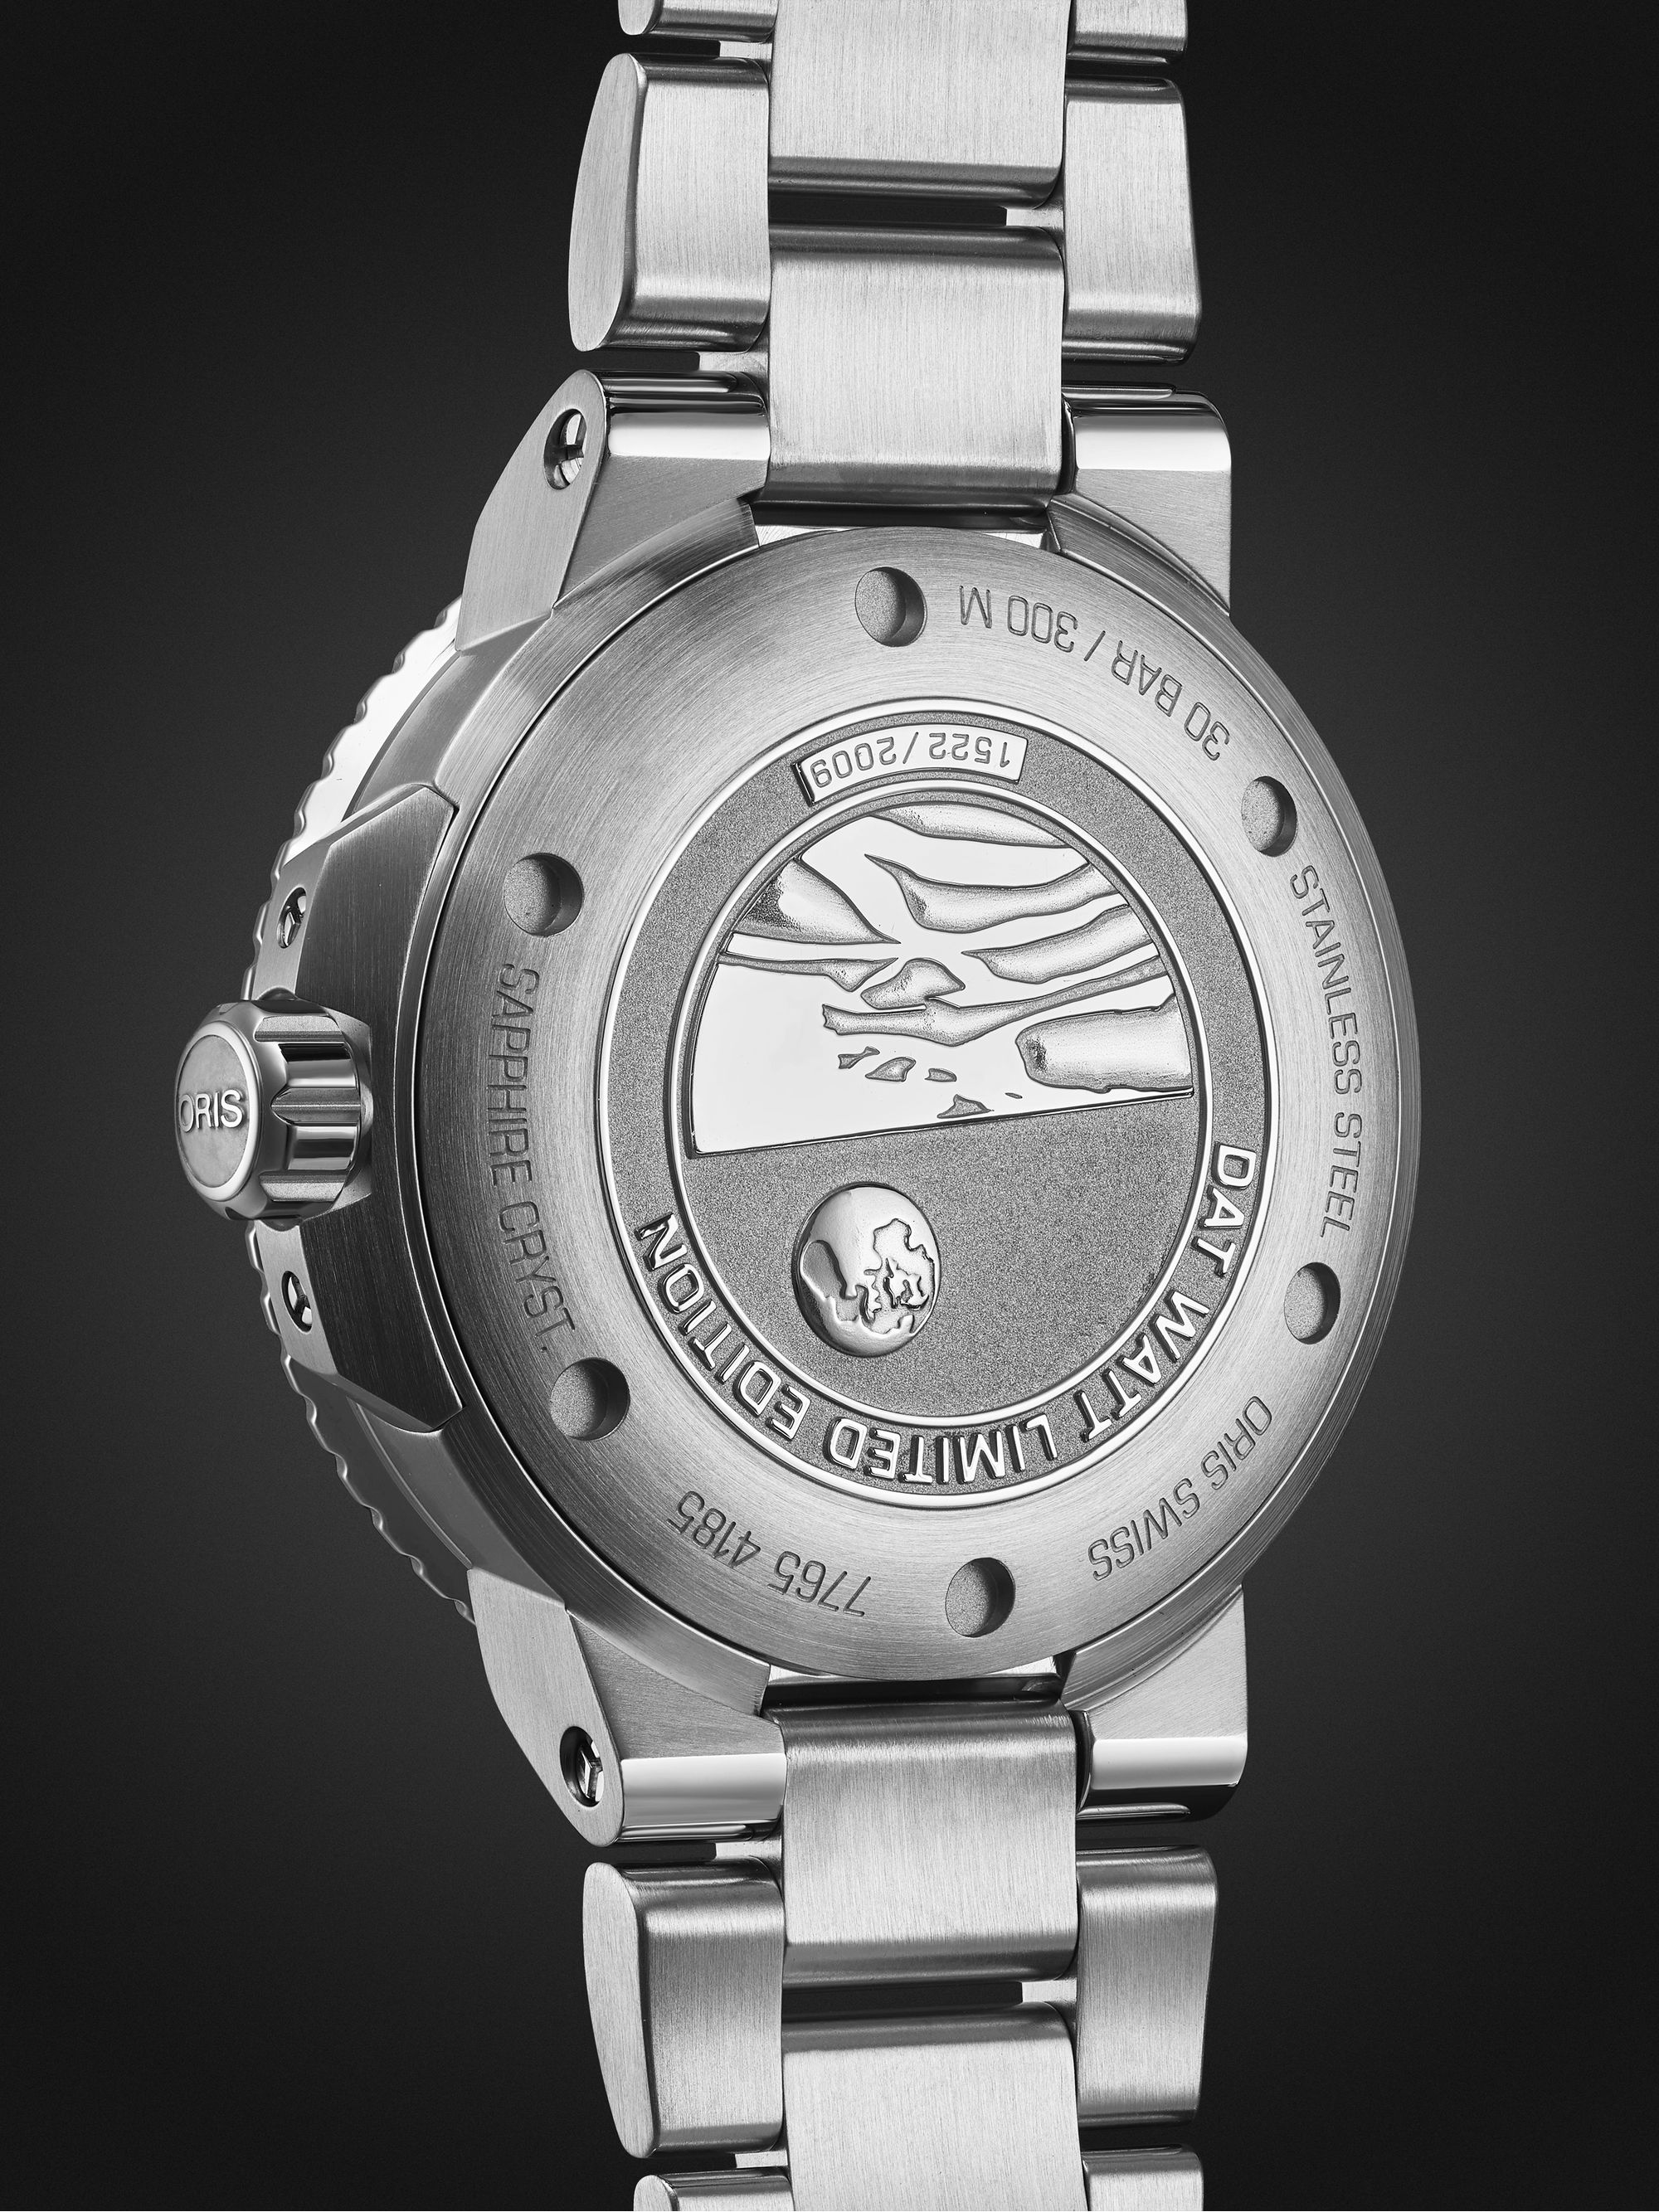 ORIS Aquis Dat Watt Limited Edition Automatic 43.5mm Stainless Steel Watch, Ref. No. 01 761 7765 4185